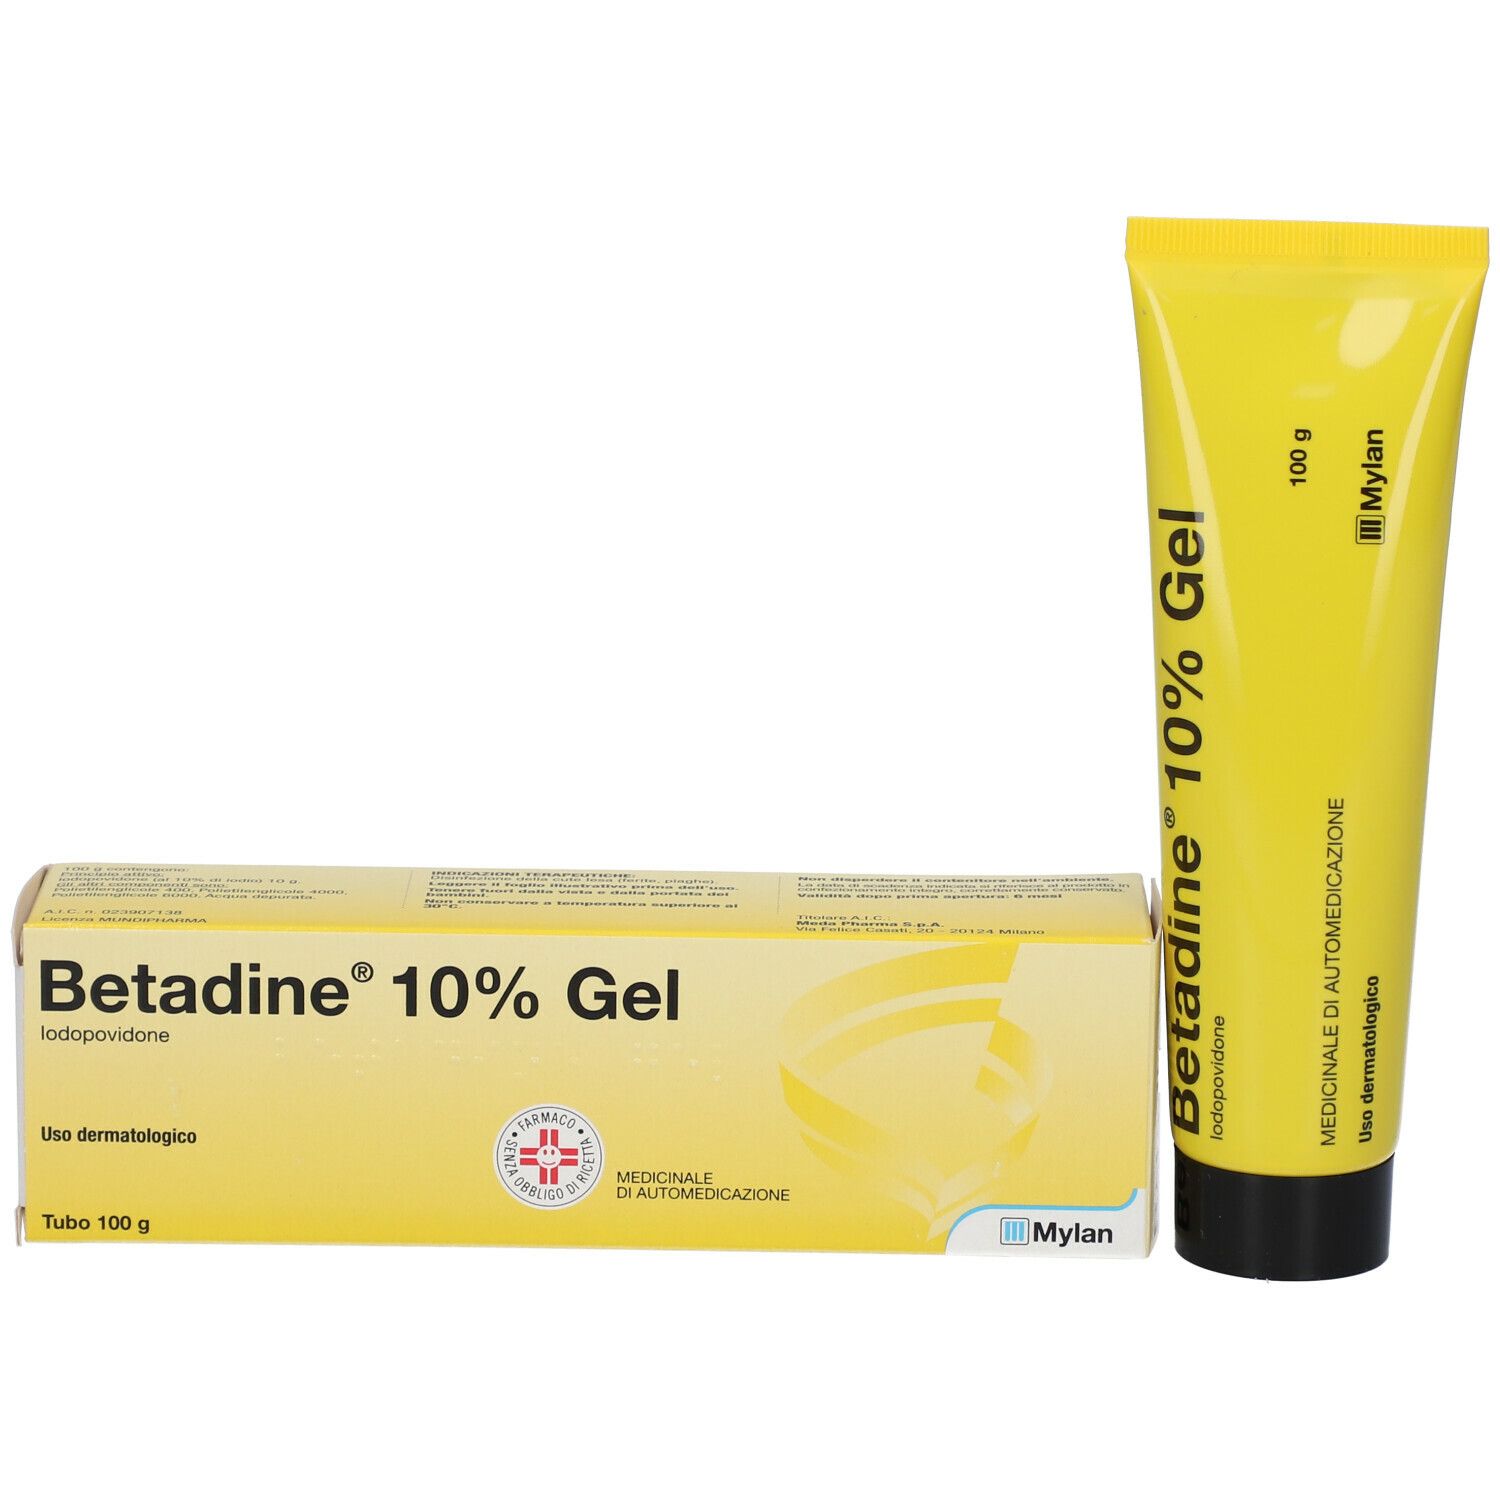 Betadine® 10% Gel